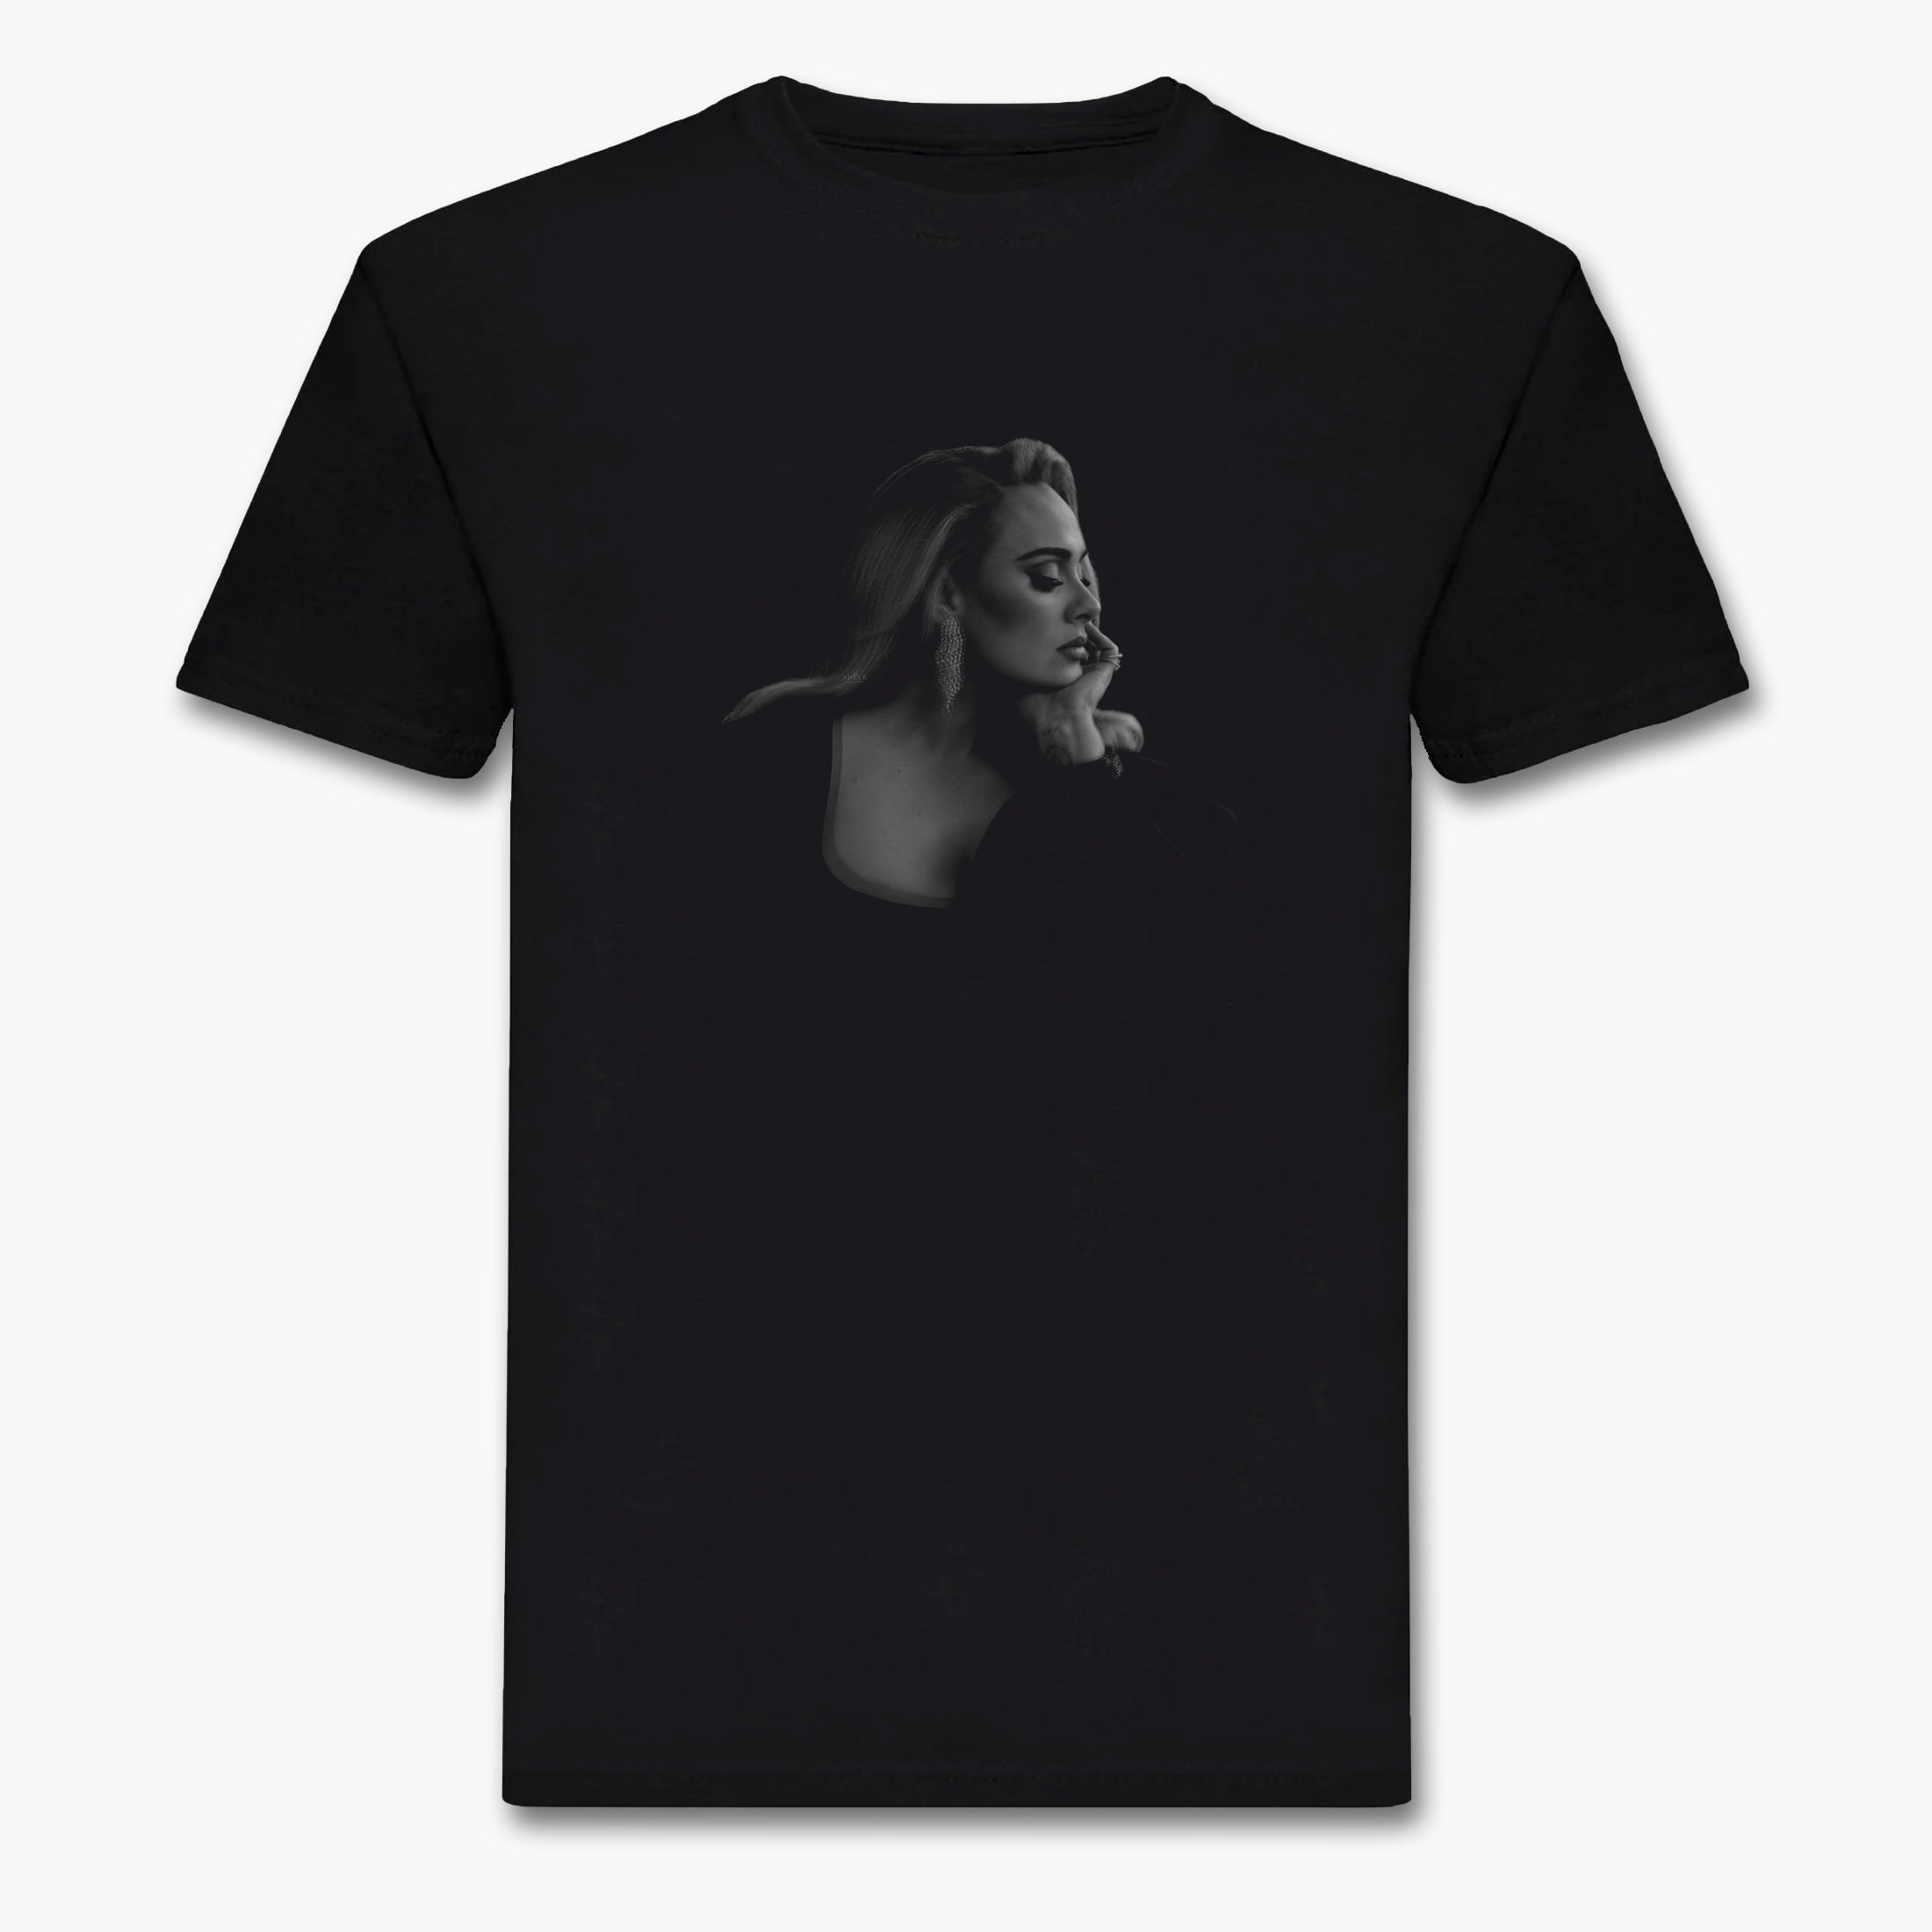 Discover Adele T-shirt. Adele Graphic Tee. Iconic Photo T-shirt